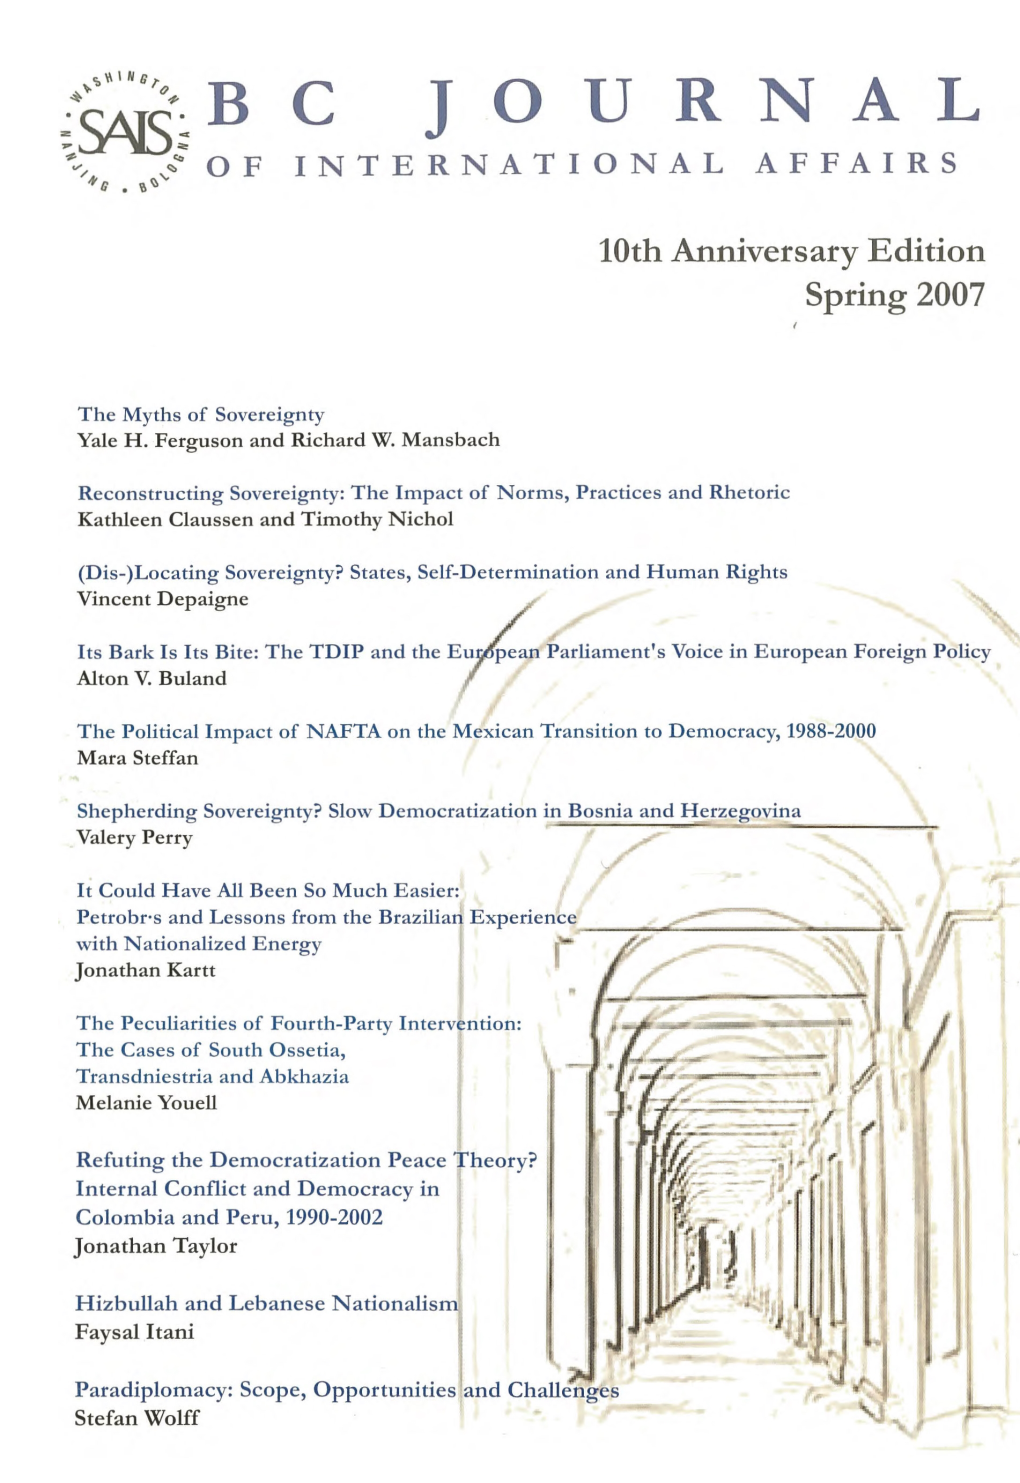 Bologna Center Journal of International Affairs